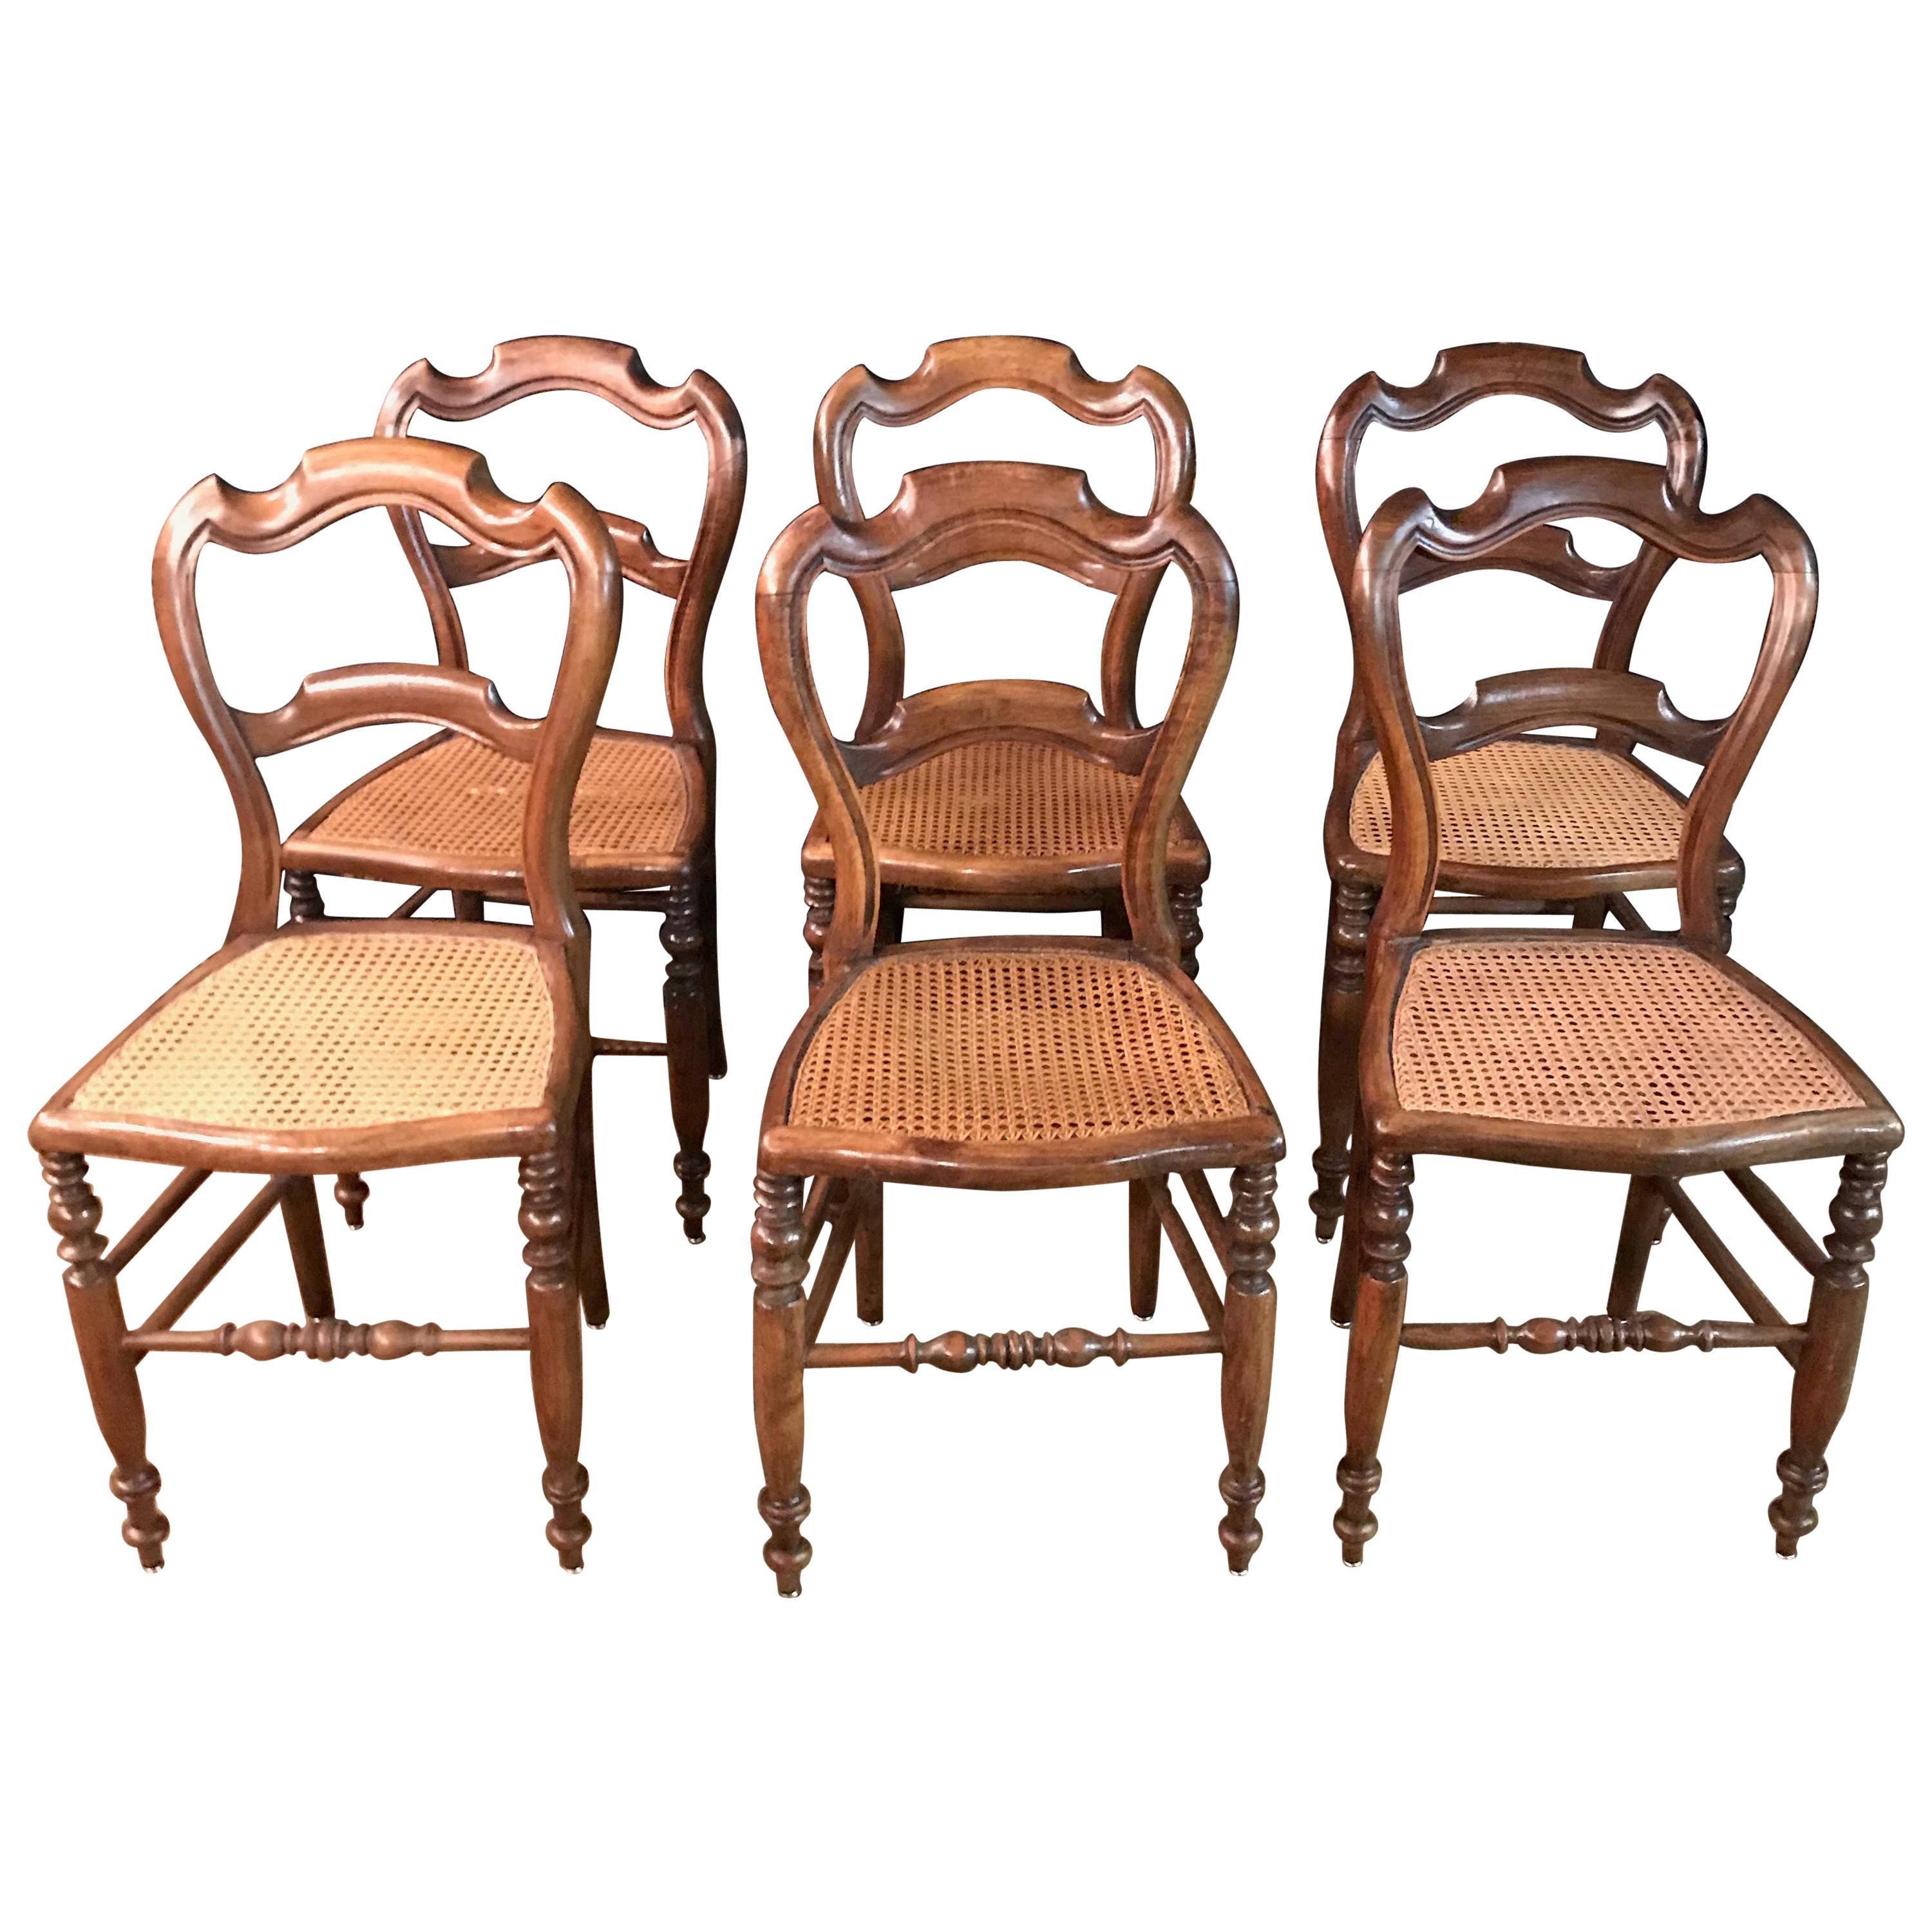 6 Original Biedermeier Chairs Caféhaus Seat Weave circa 1850-1860 Solid Mahogany